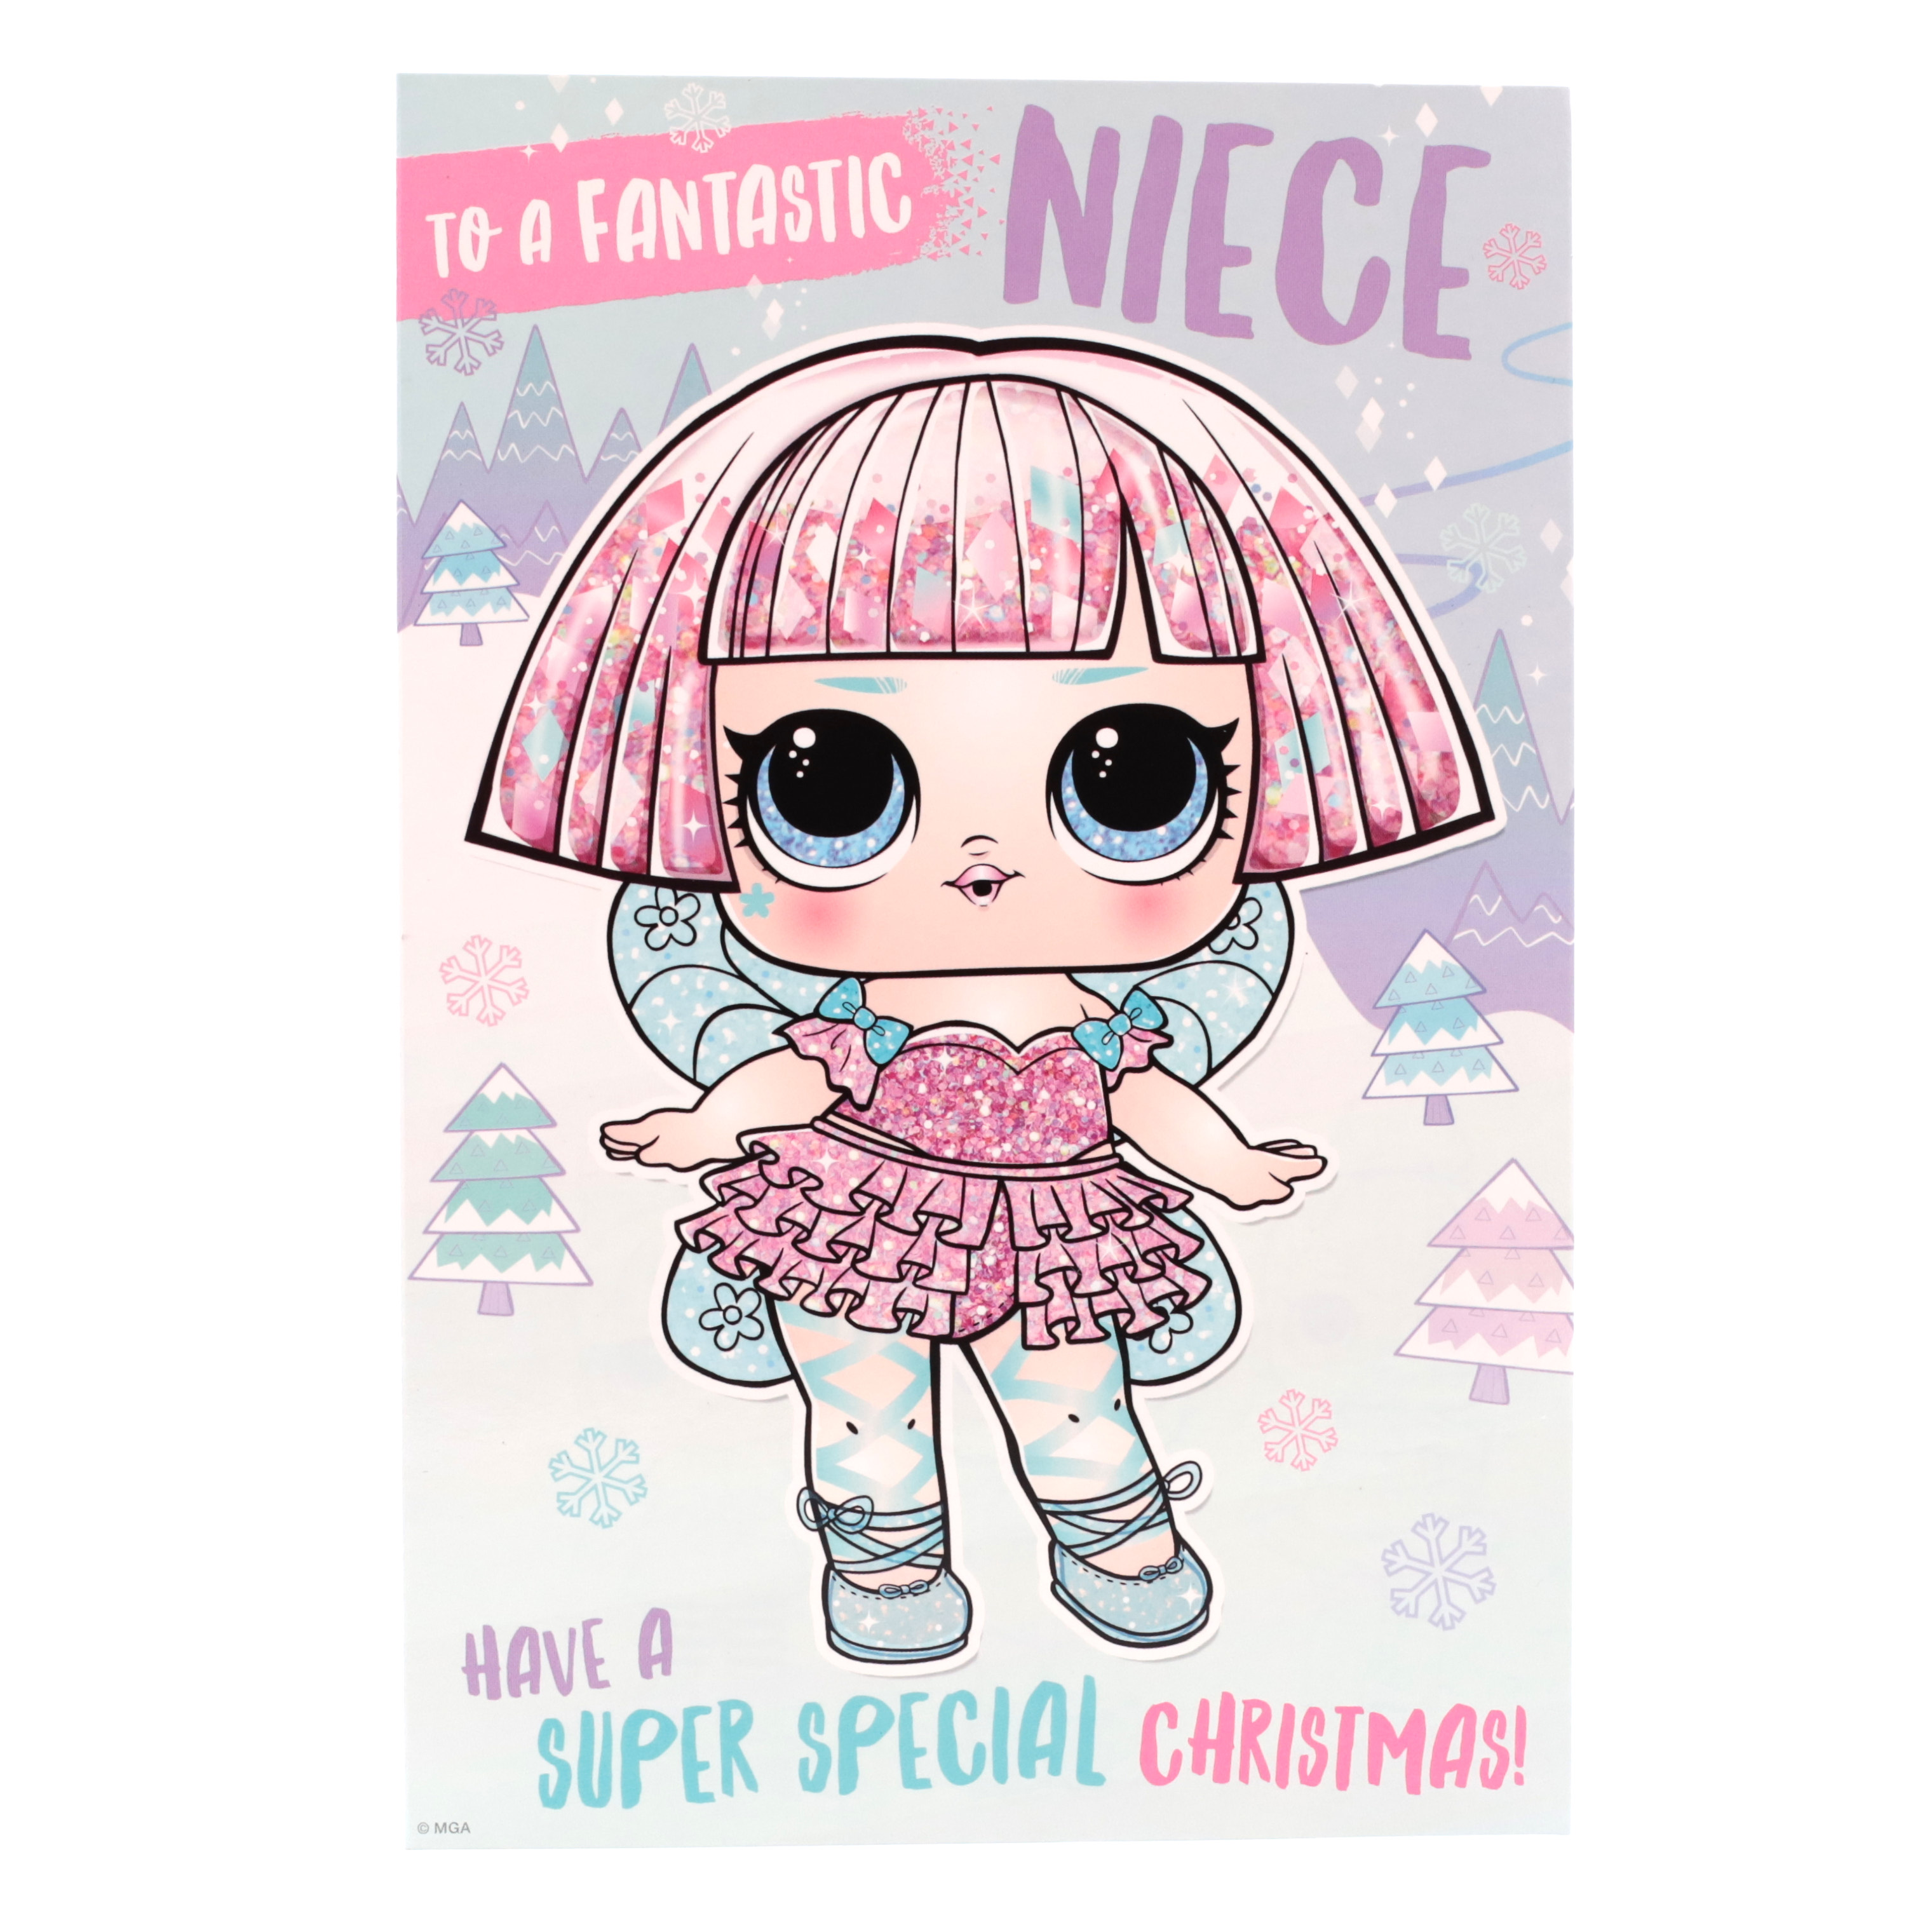 LOL Christmas Card - Fantastic Niece, Super Special Christmas